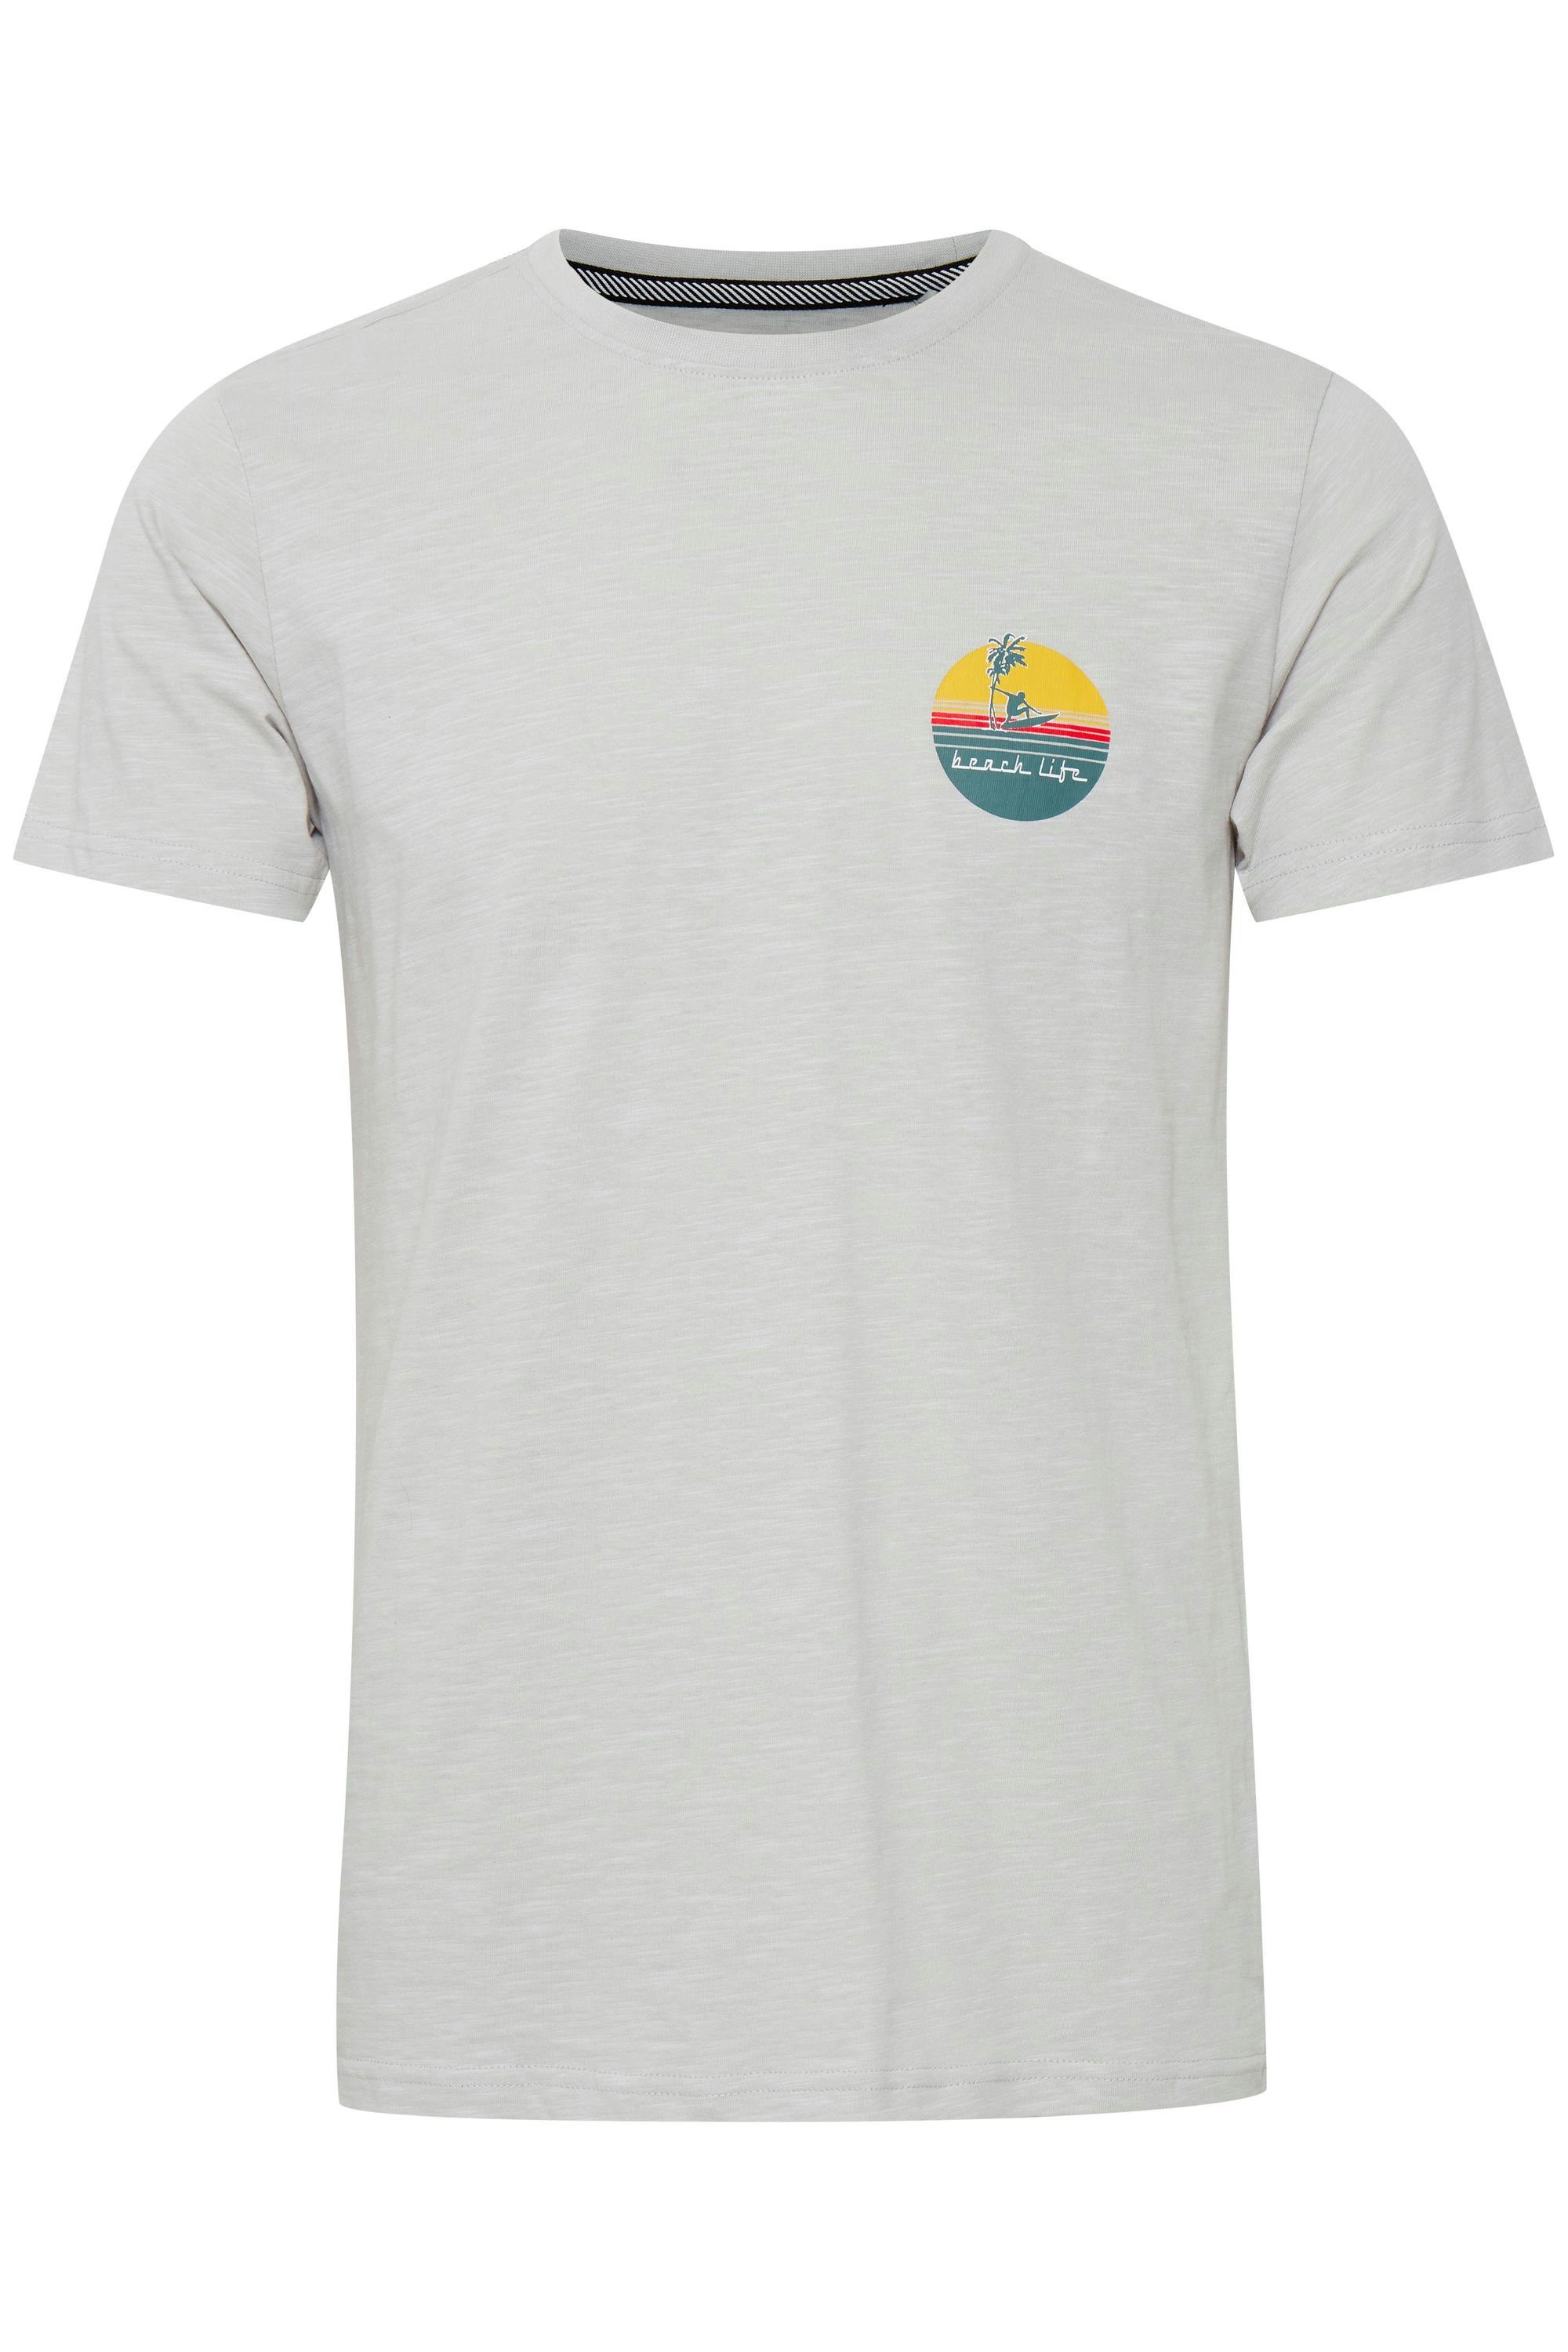 !Solid Print-Shirt SDEmmo T-Shirt mit Print Light Grey (154101)